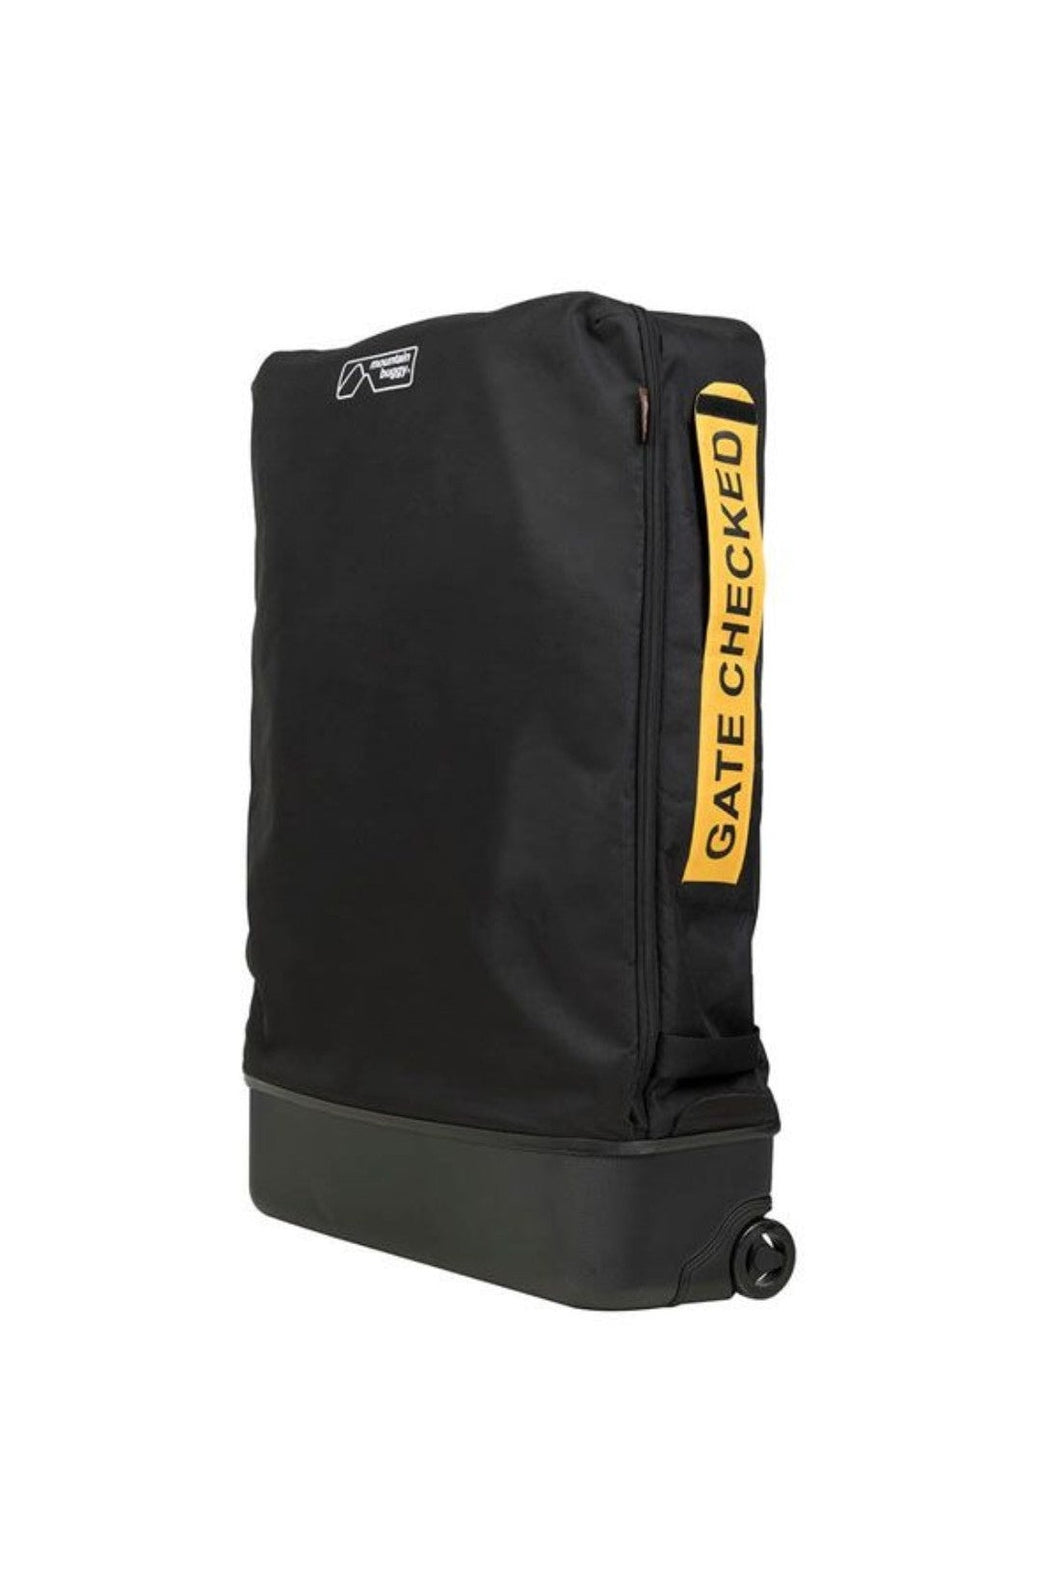 Mountain Buggy Travel Bag Xl V1 Black 1